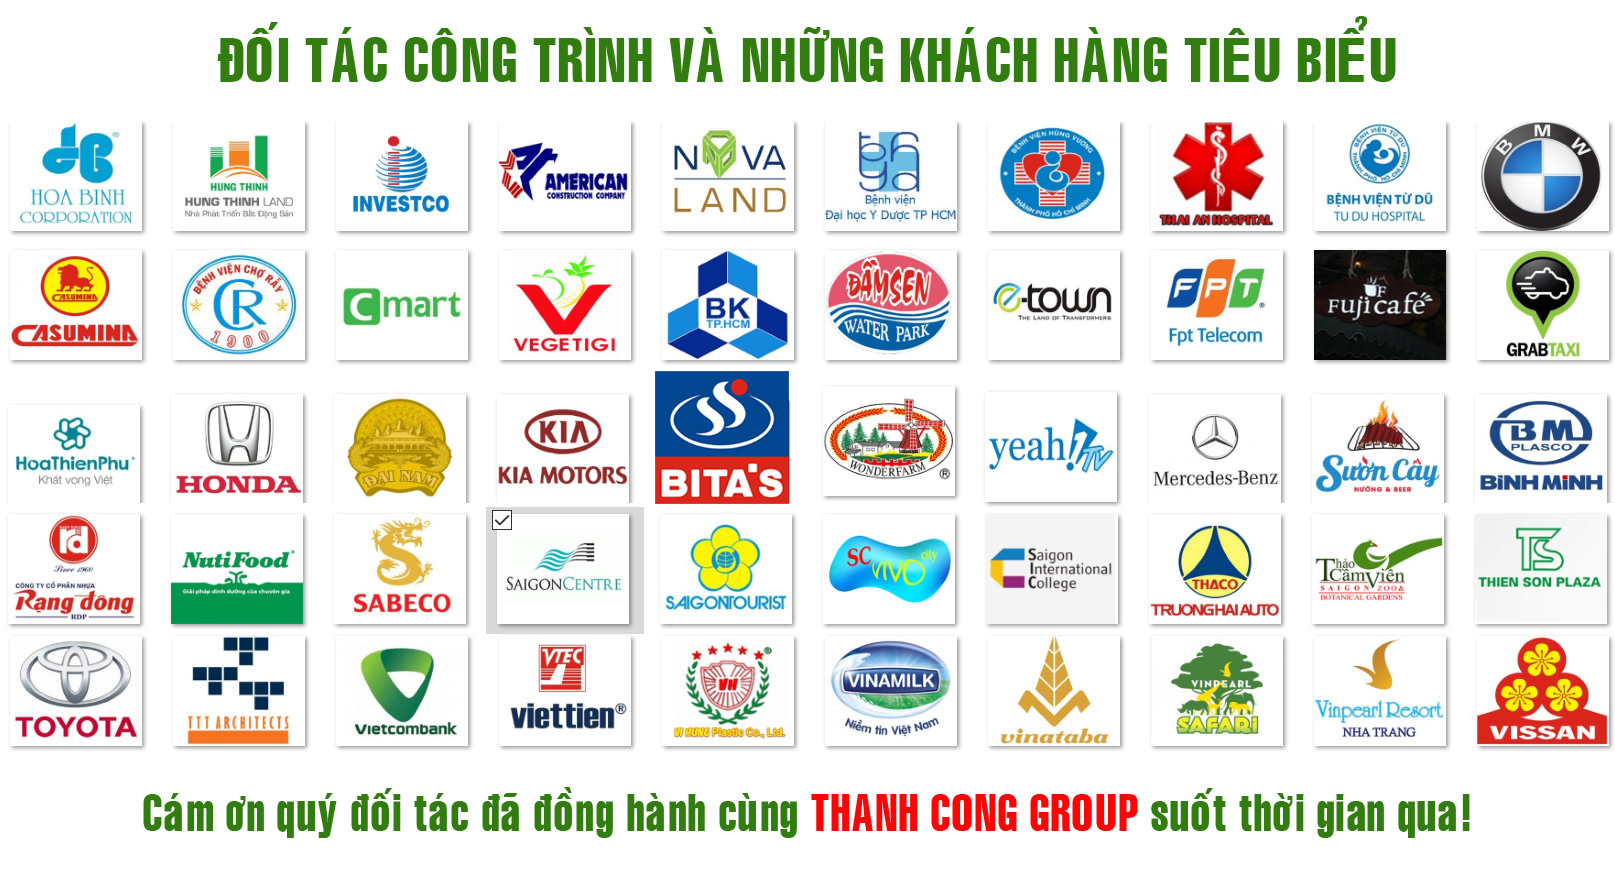 Khach hang Thanh Cong Group